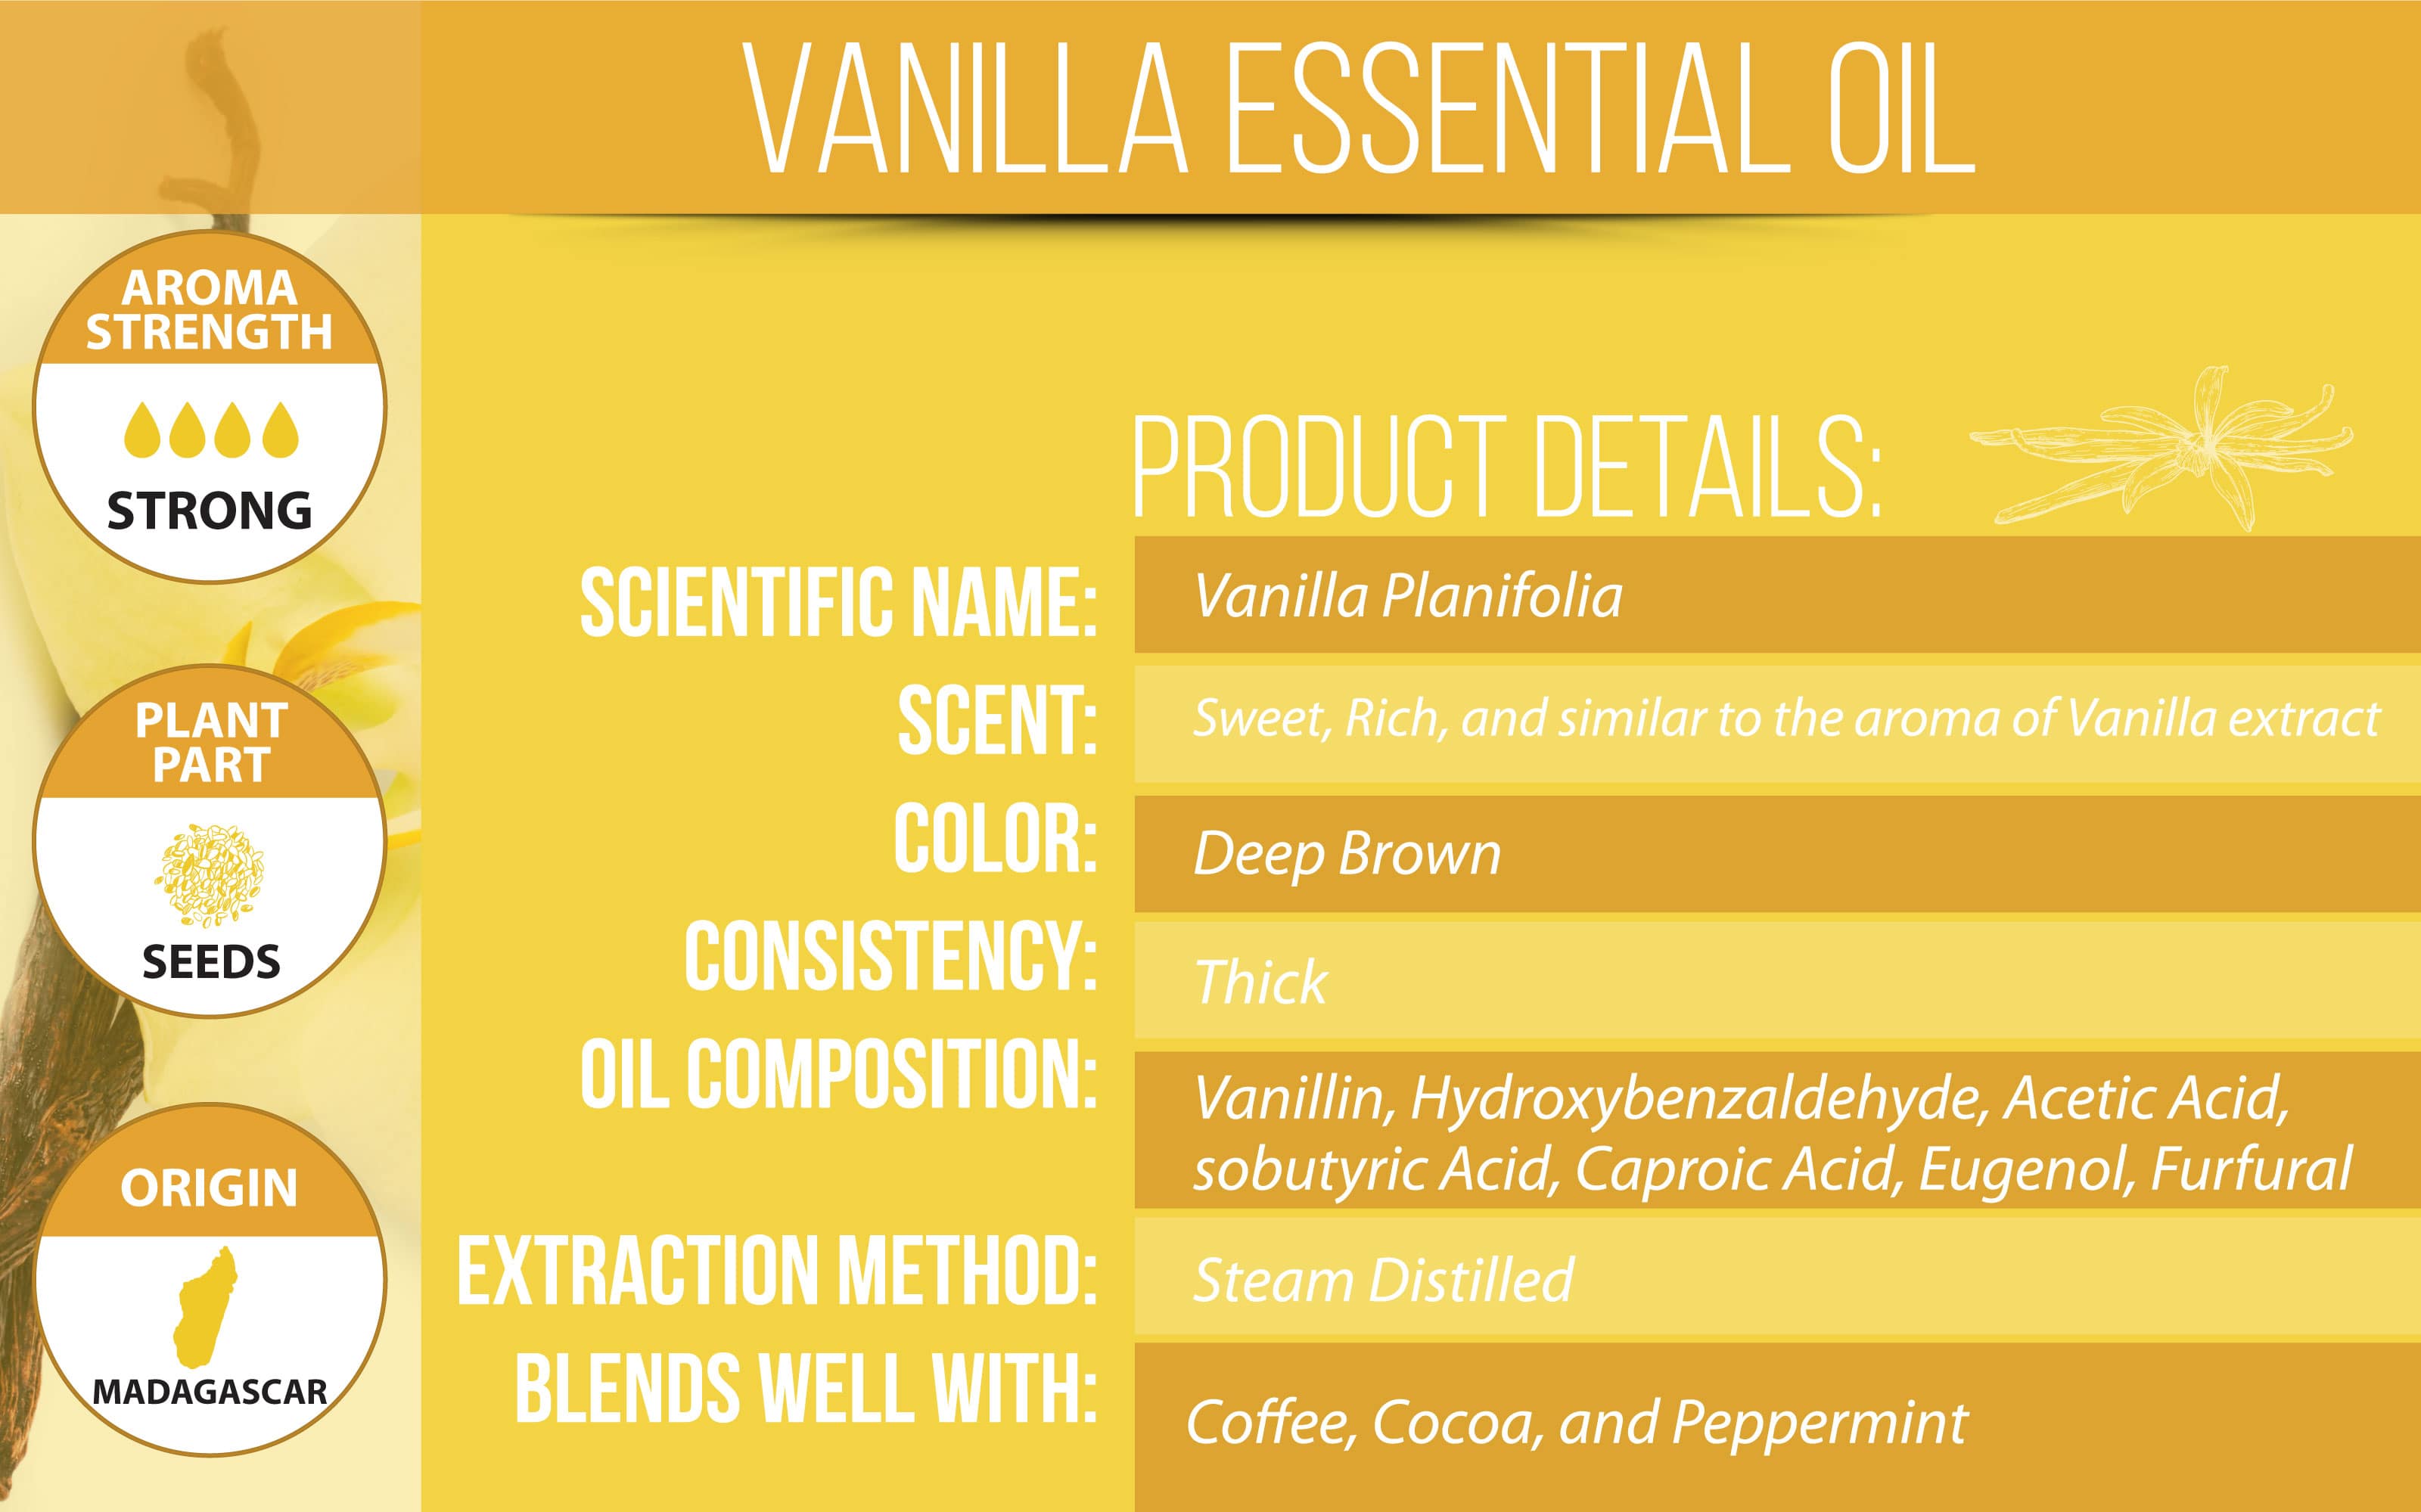 Love Vanilla Essential Oil Blend – Plant Therapy